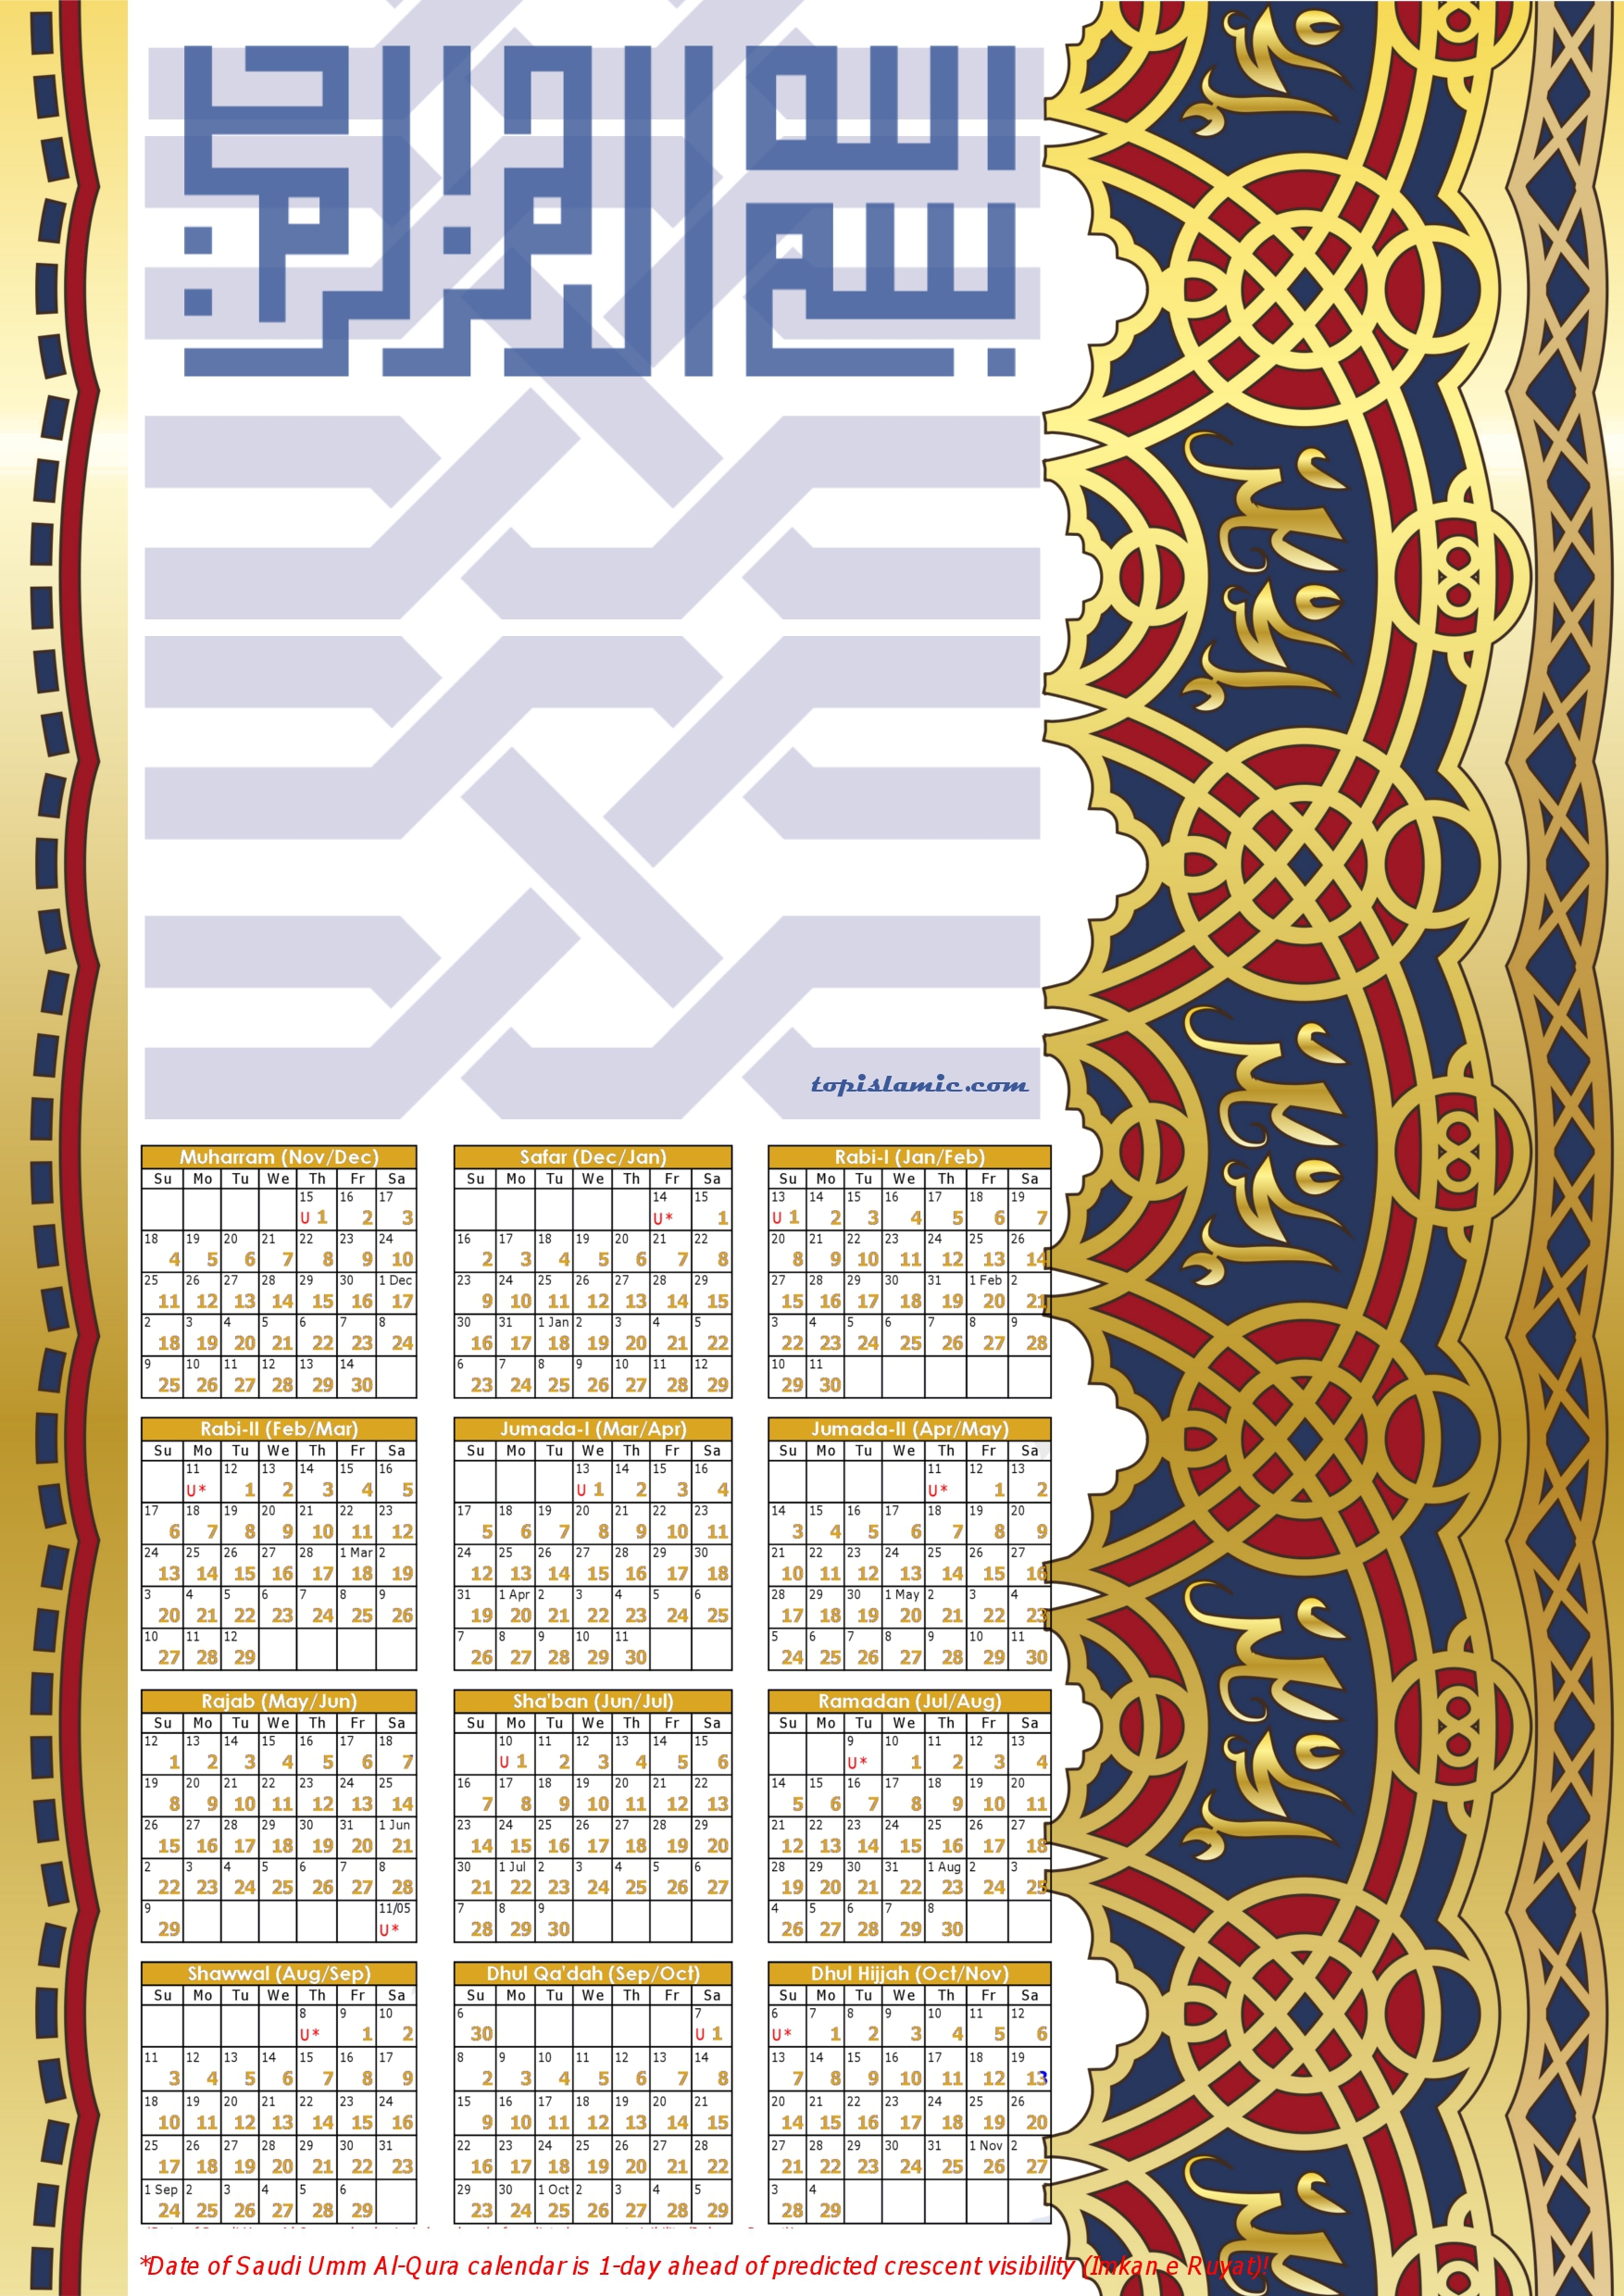 Hijri calendar 1434 Islamic Calendar 2012/13 Download